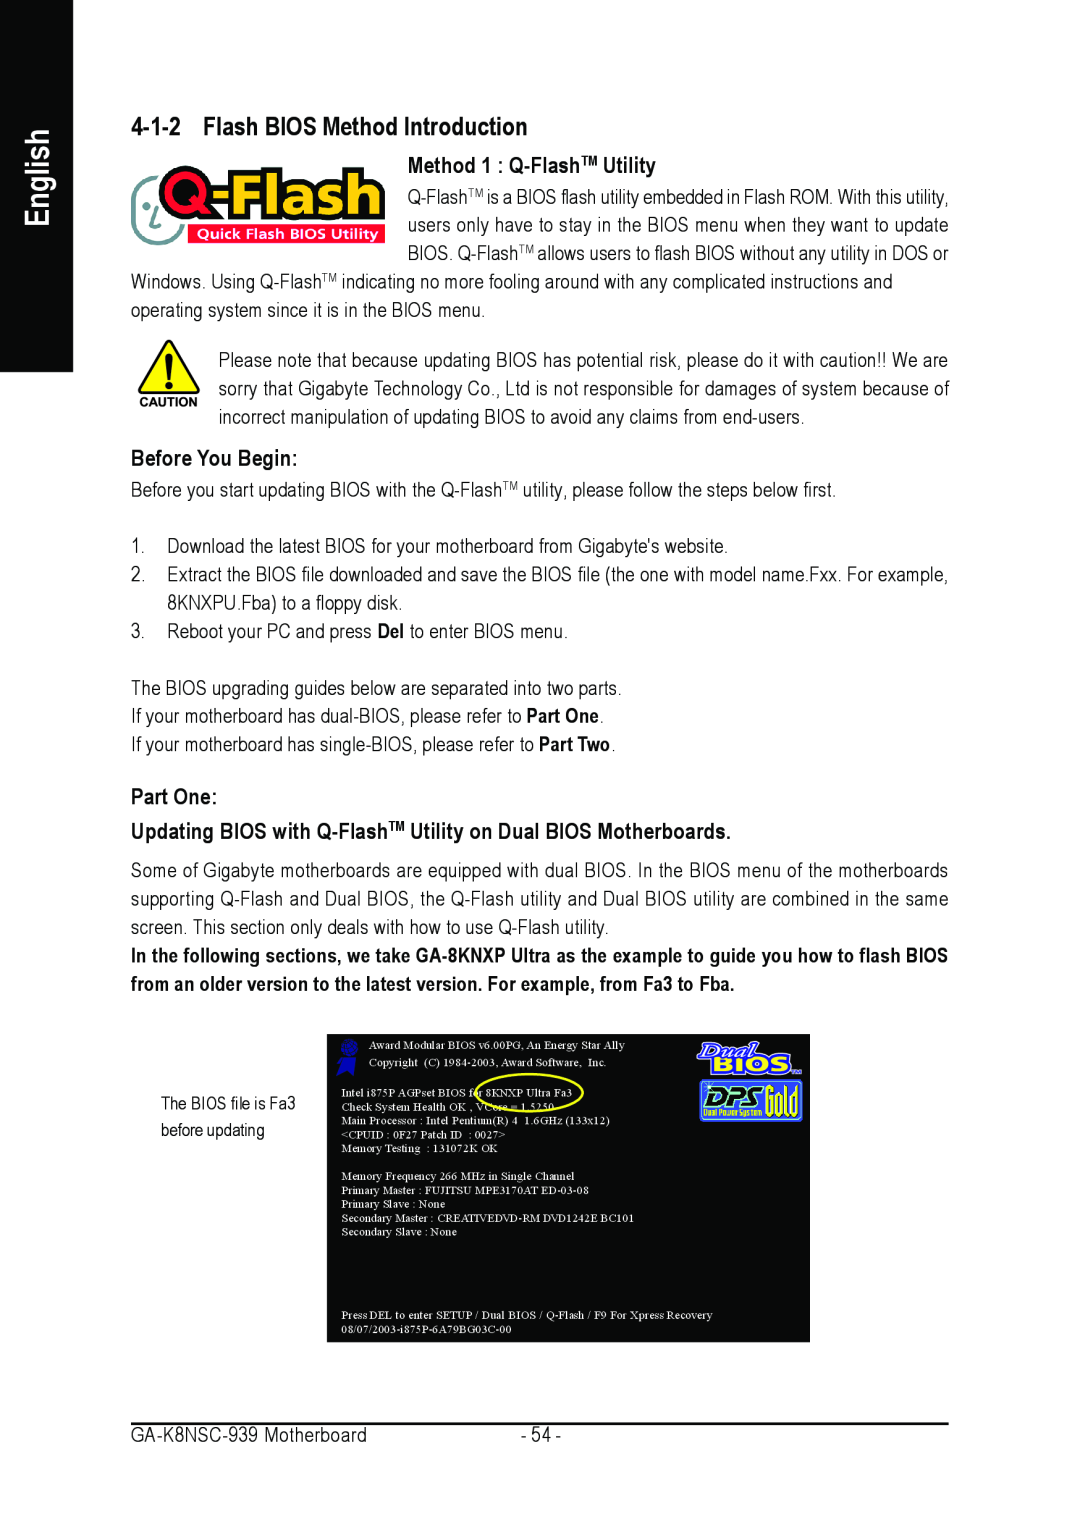 AMD GA-K8NSC-939 Flash BIOS Method Introduction, Method 1 Q-FlashTM Utility, Before You Begin, Part One, English 